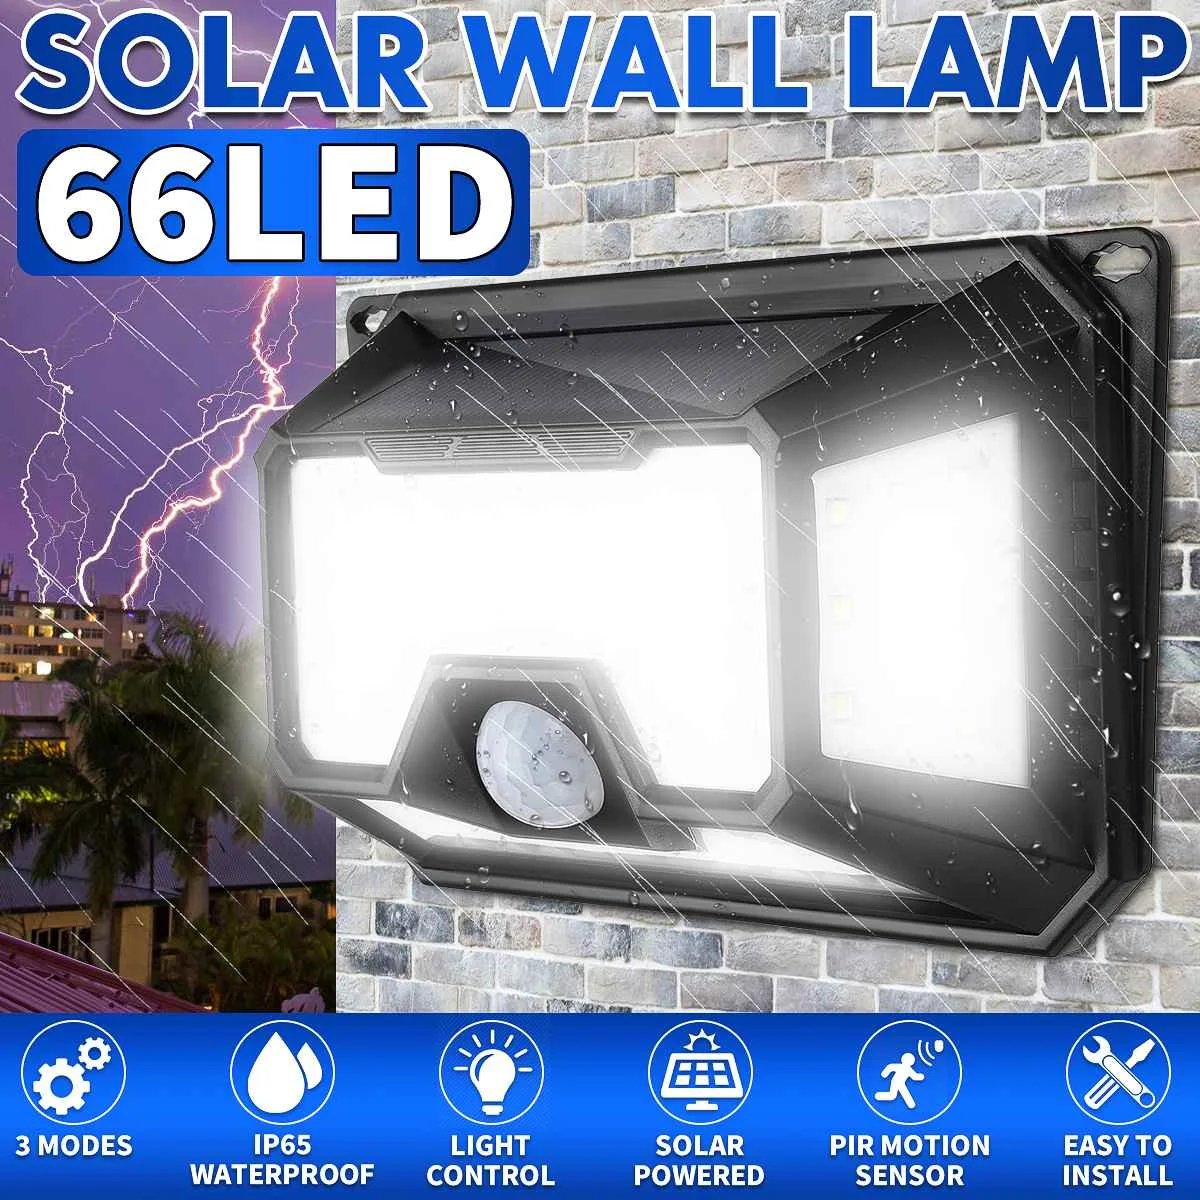 

100W Solar Light 66 LED 4 Side Outdoor Solar PIR Motion Sensor Garden Wall Lamp 3 Mode Lamp Waterproof IP65 Street Lighting